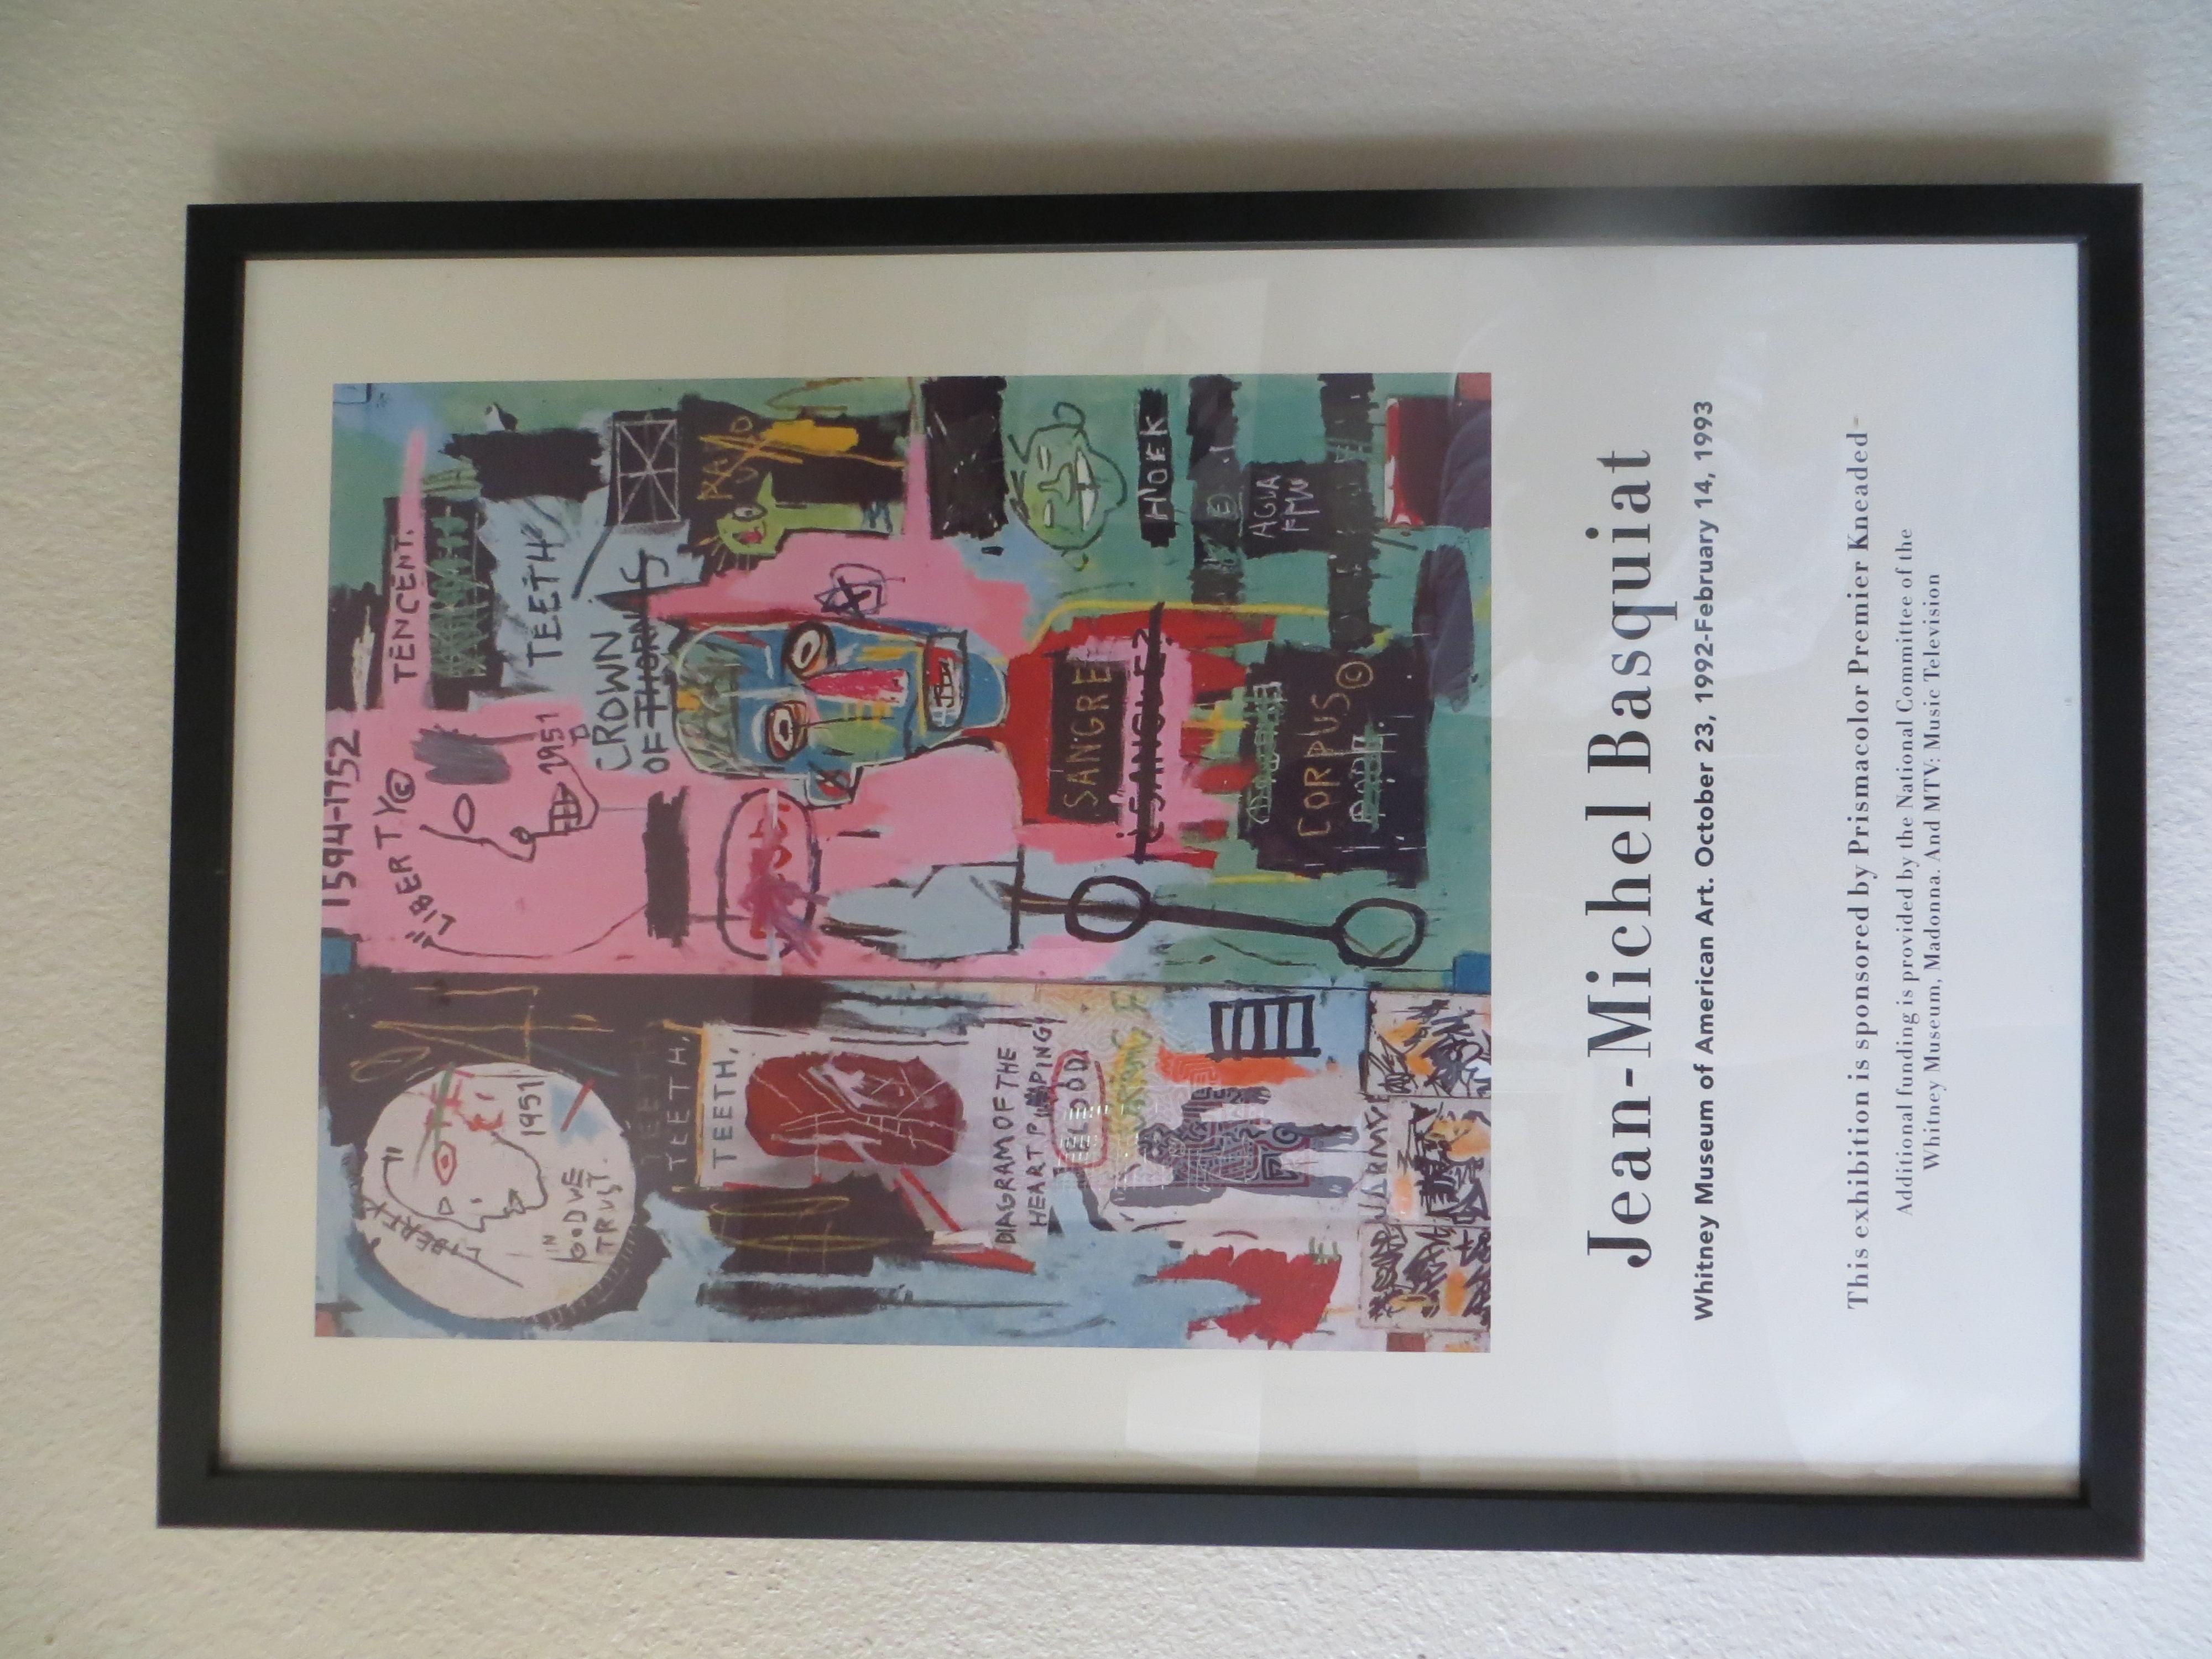  Jean-Michel Basquiat  Exhibition Poster 3